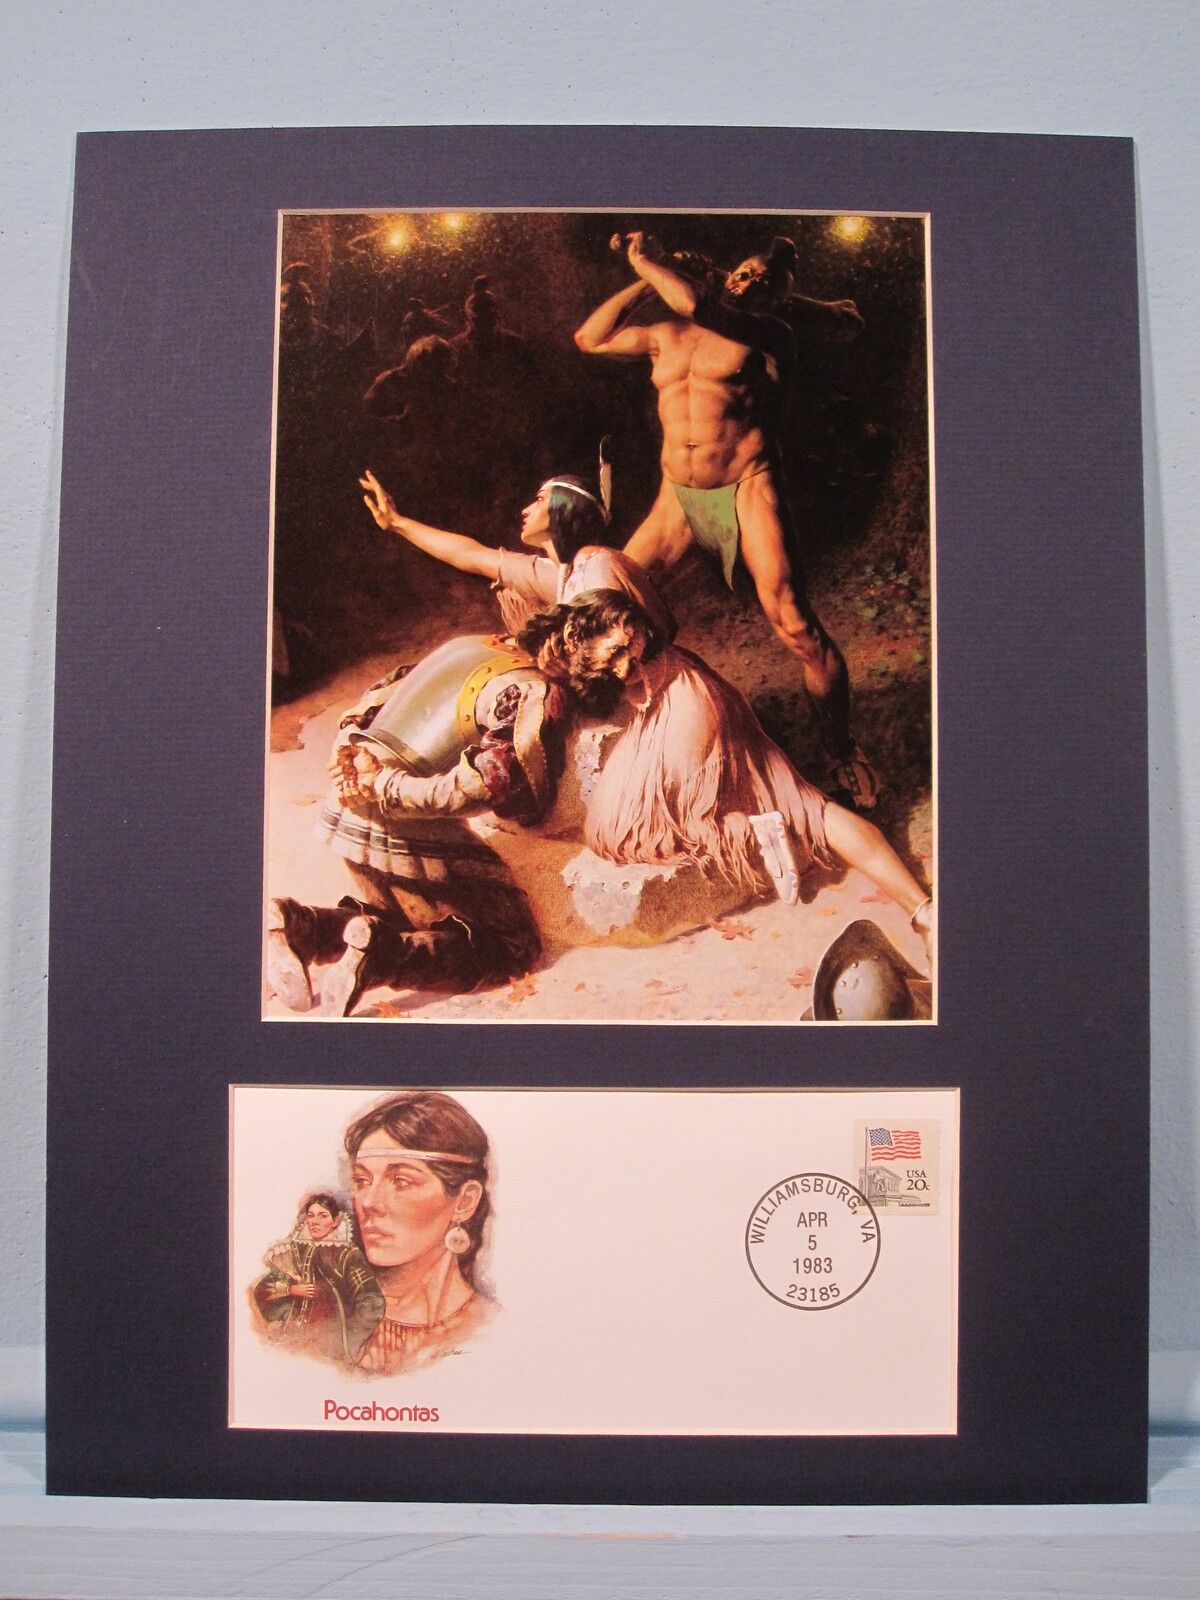 Pocahontas saves John Smith and Commemorative Cover